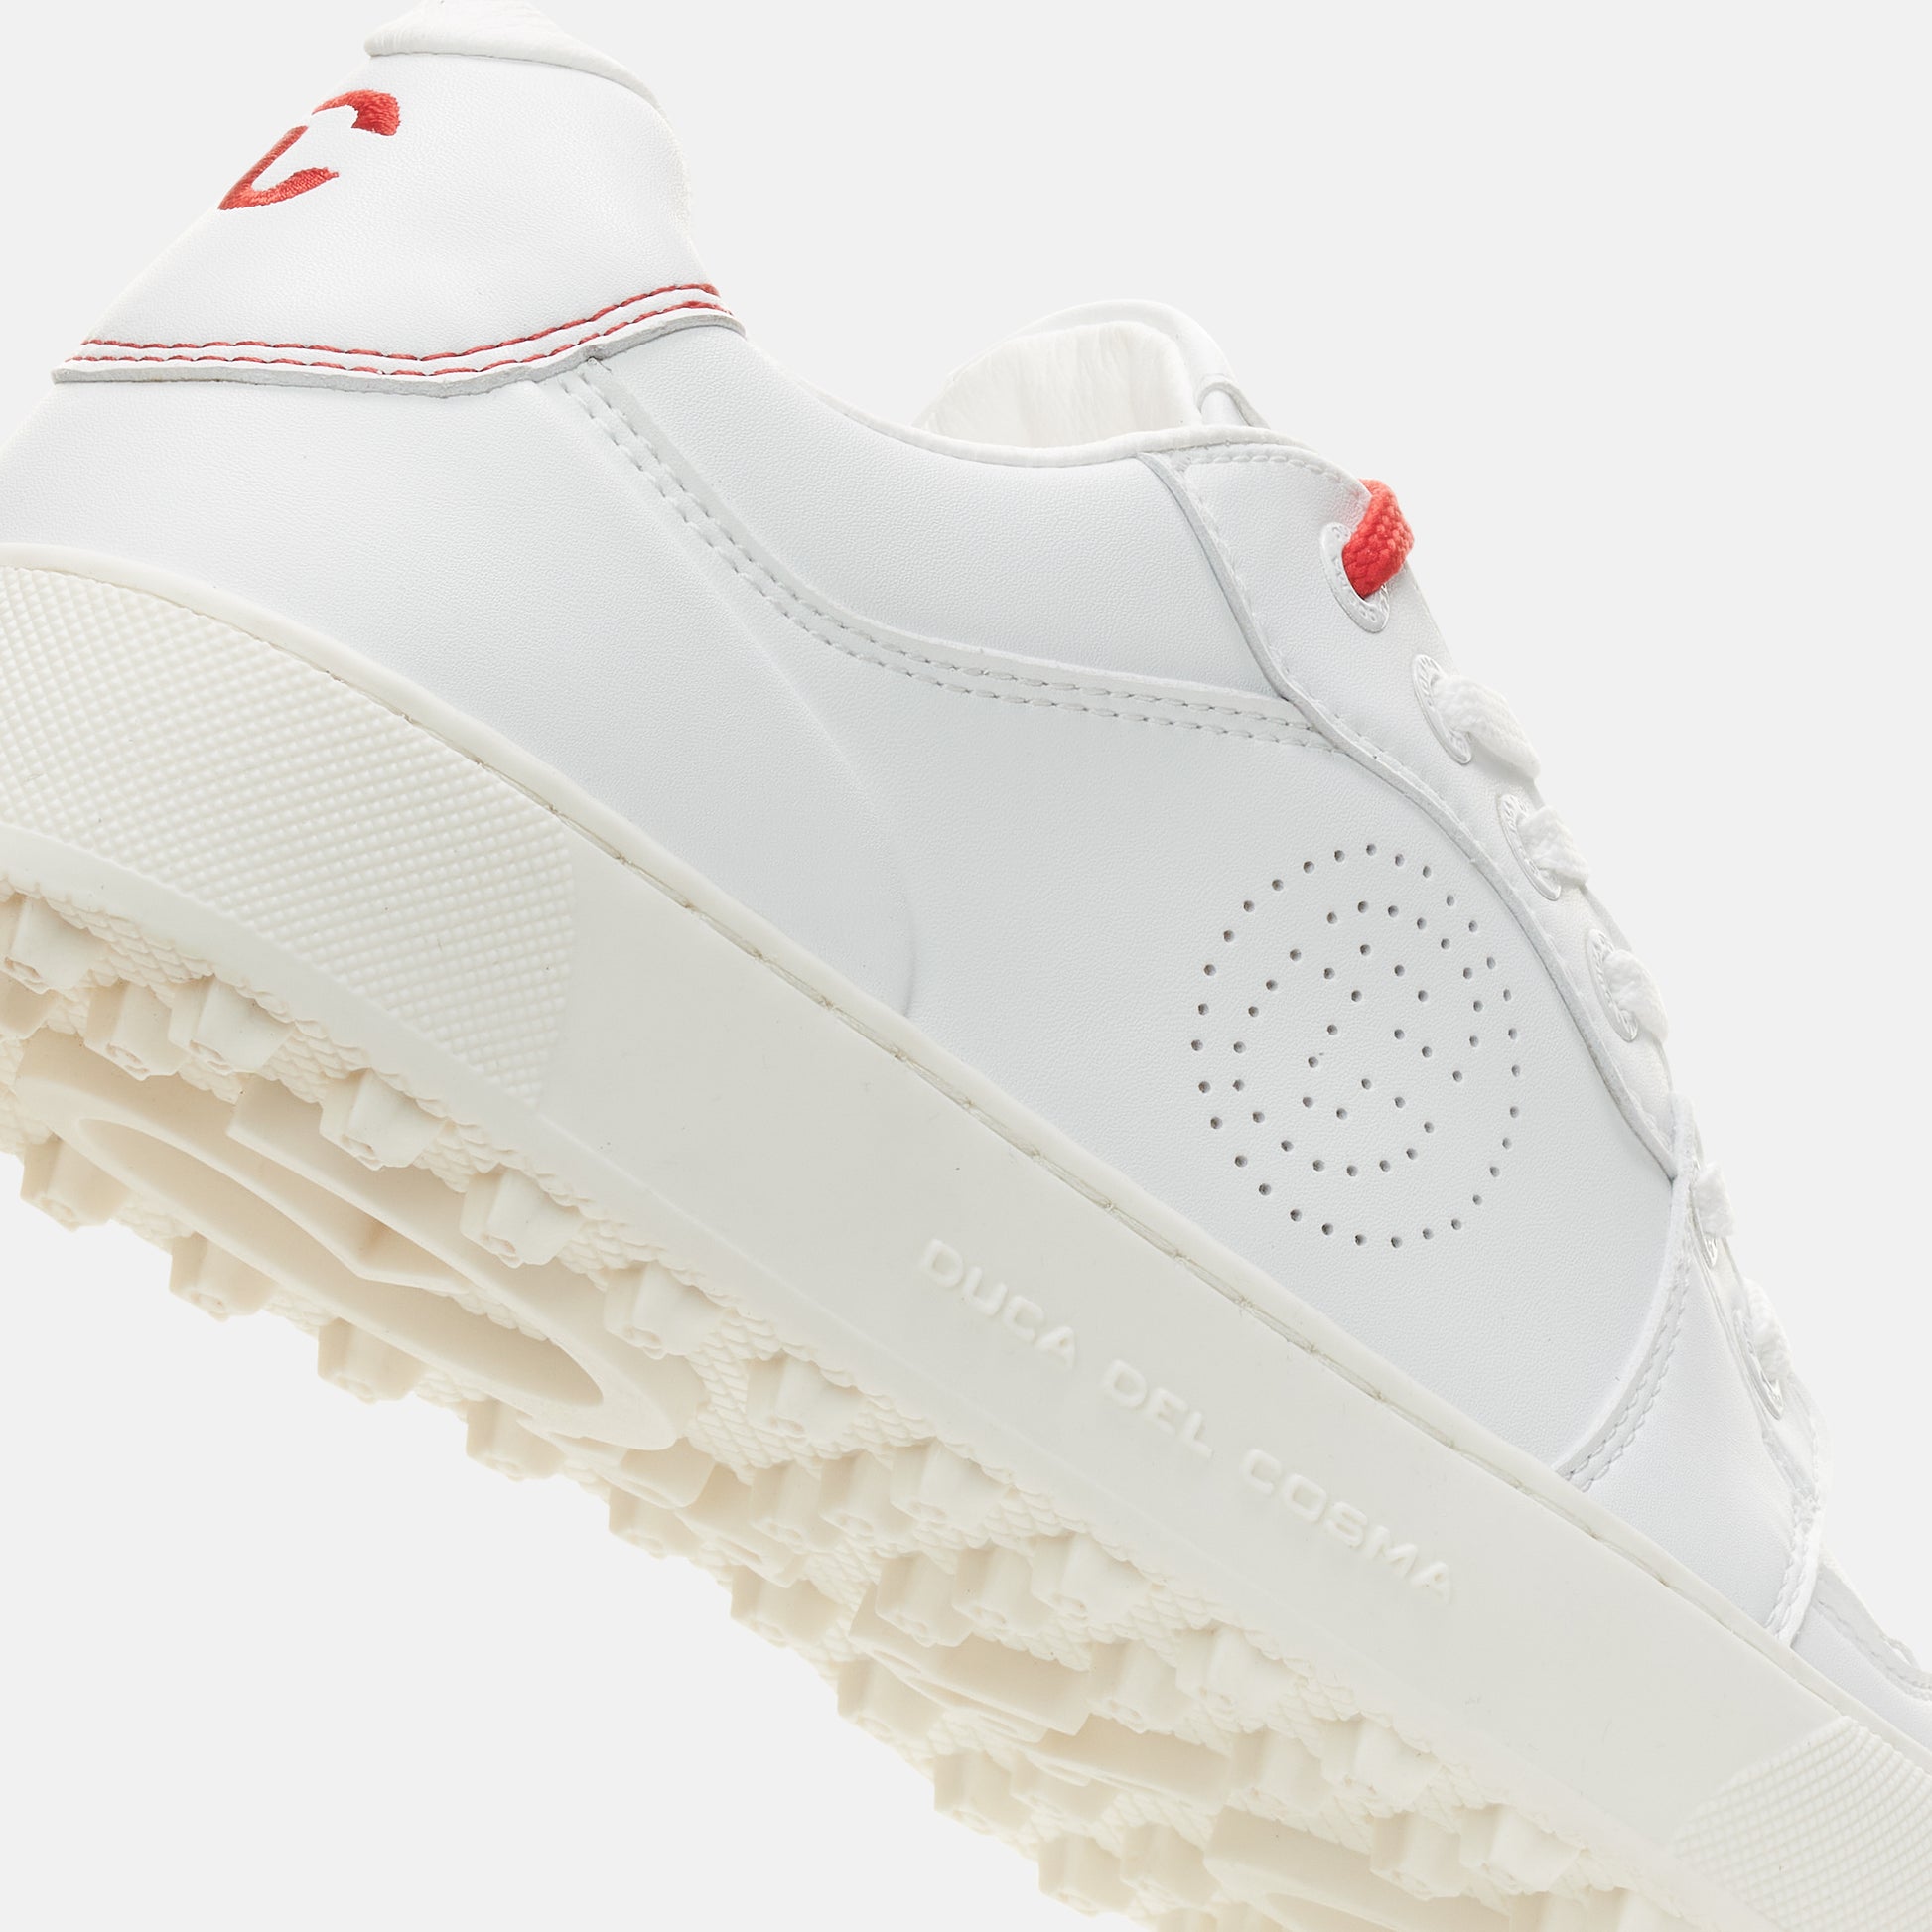 Giordana - White Women's Golf Shoes